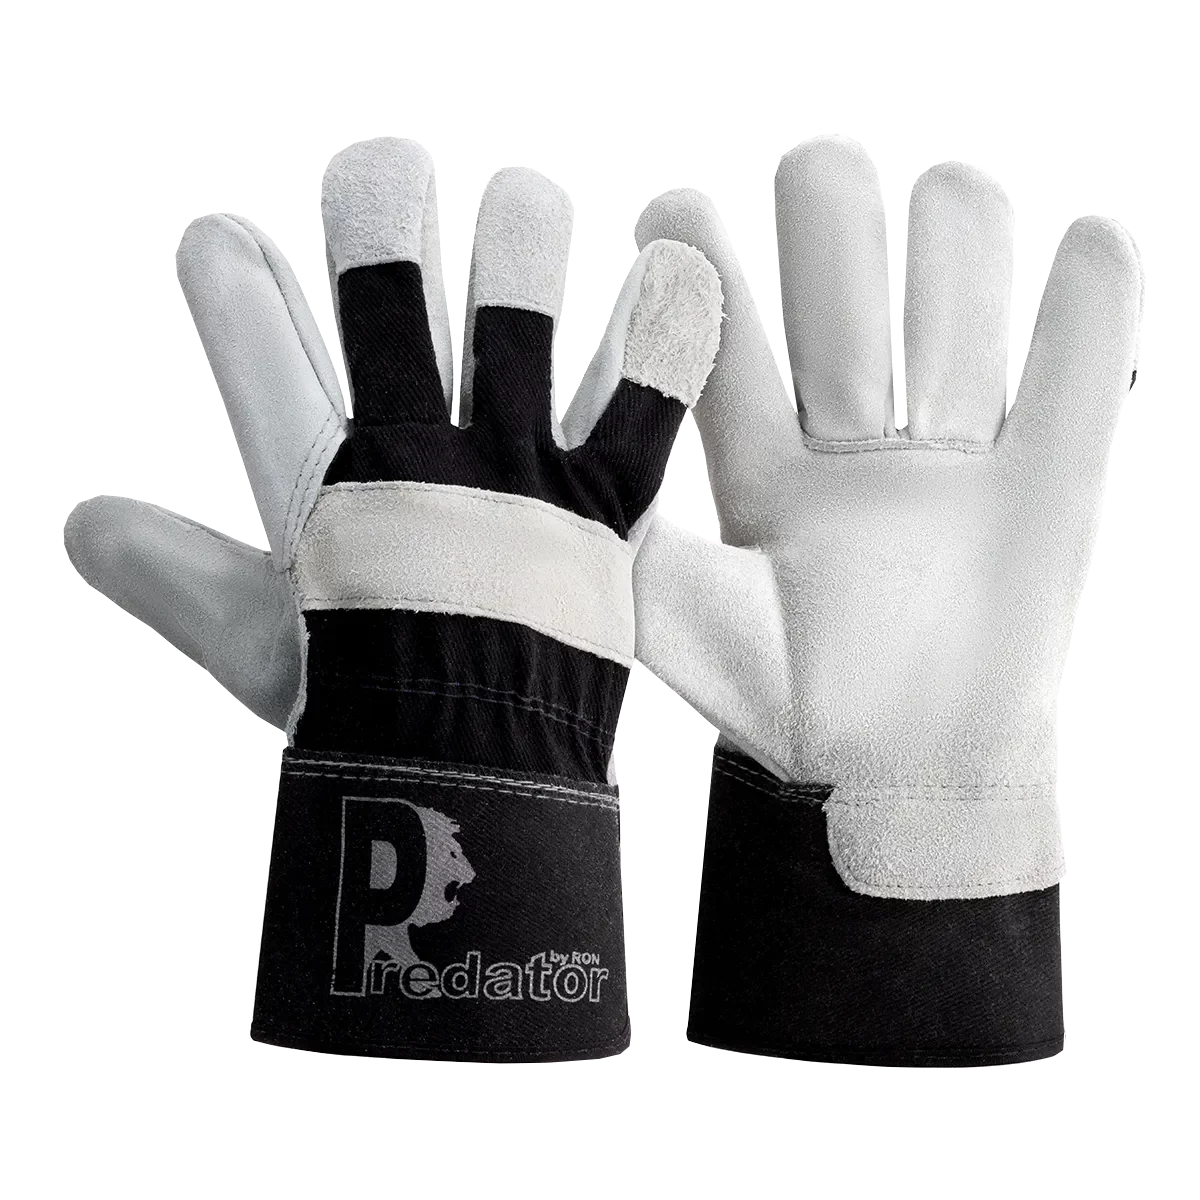 RS1B-VL Pair Safety Gloves